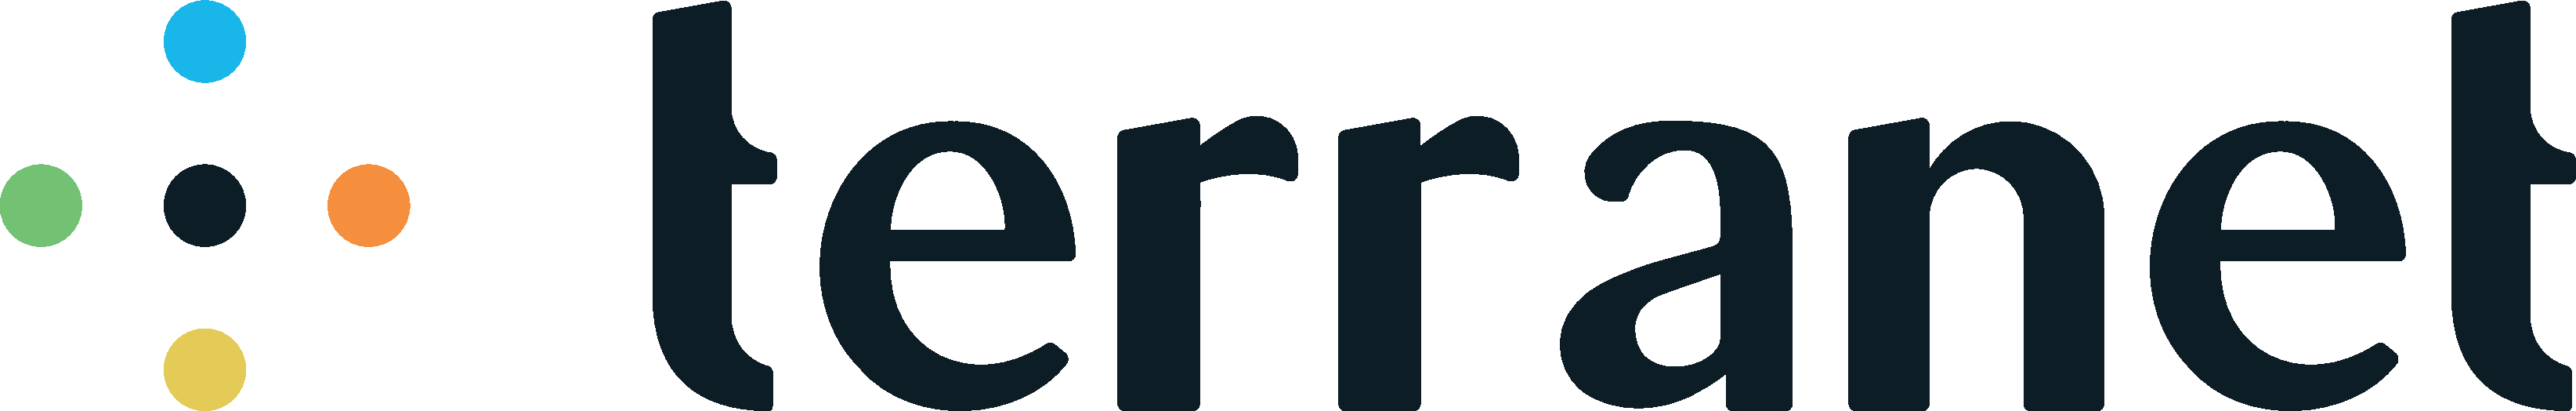 Terranet-Logo